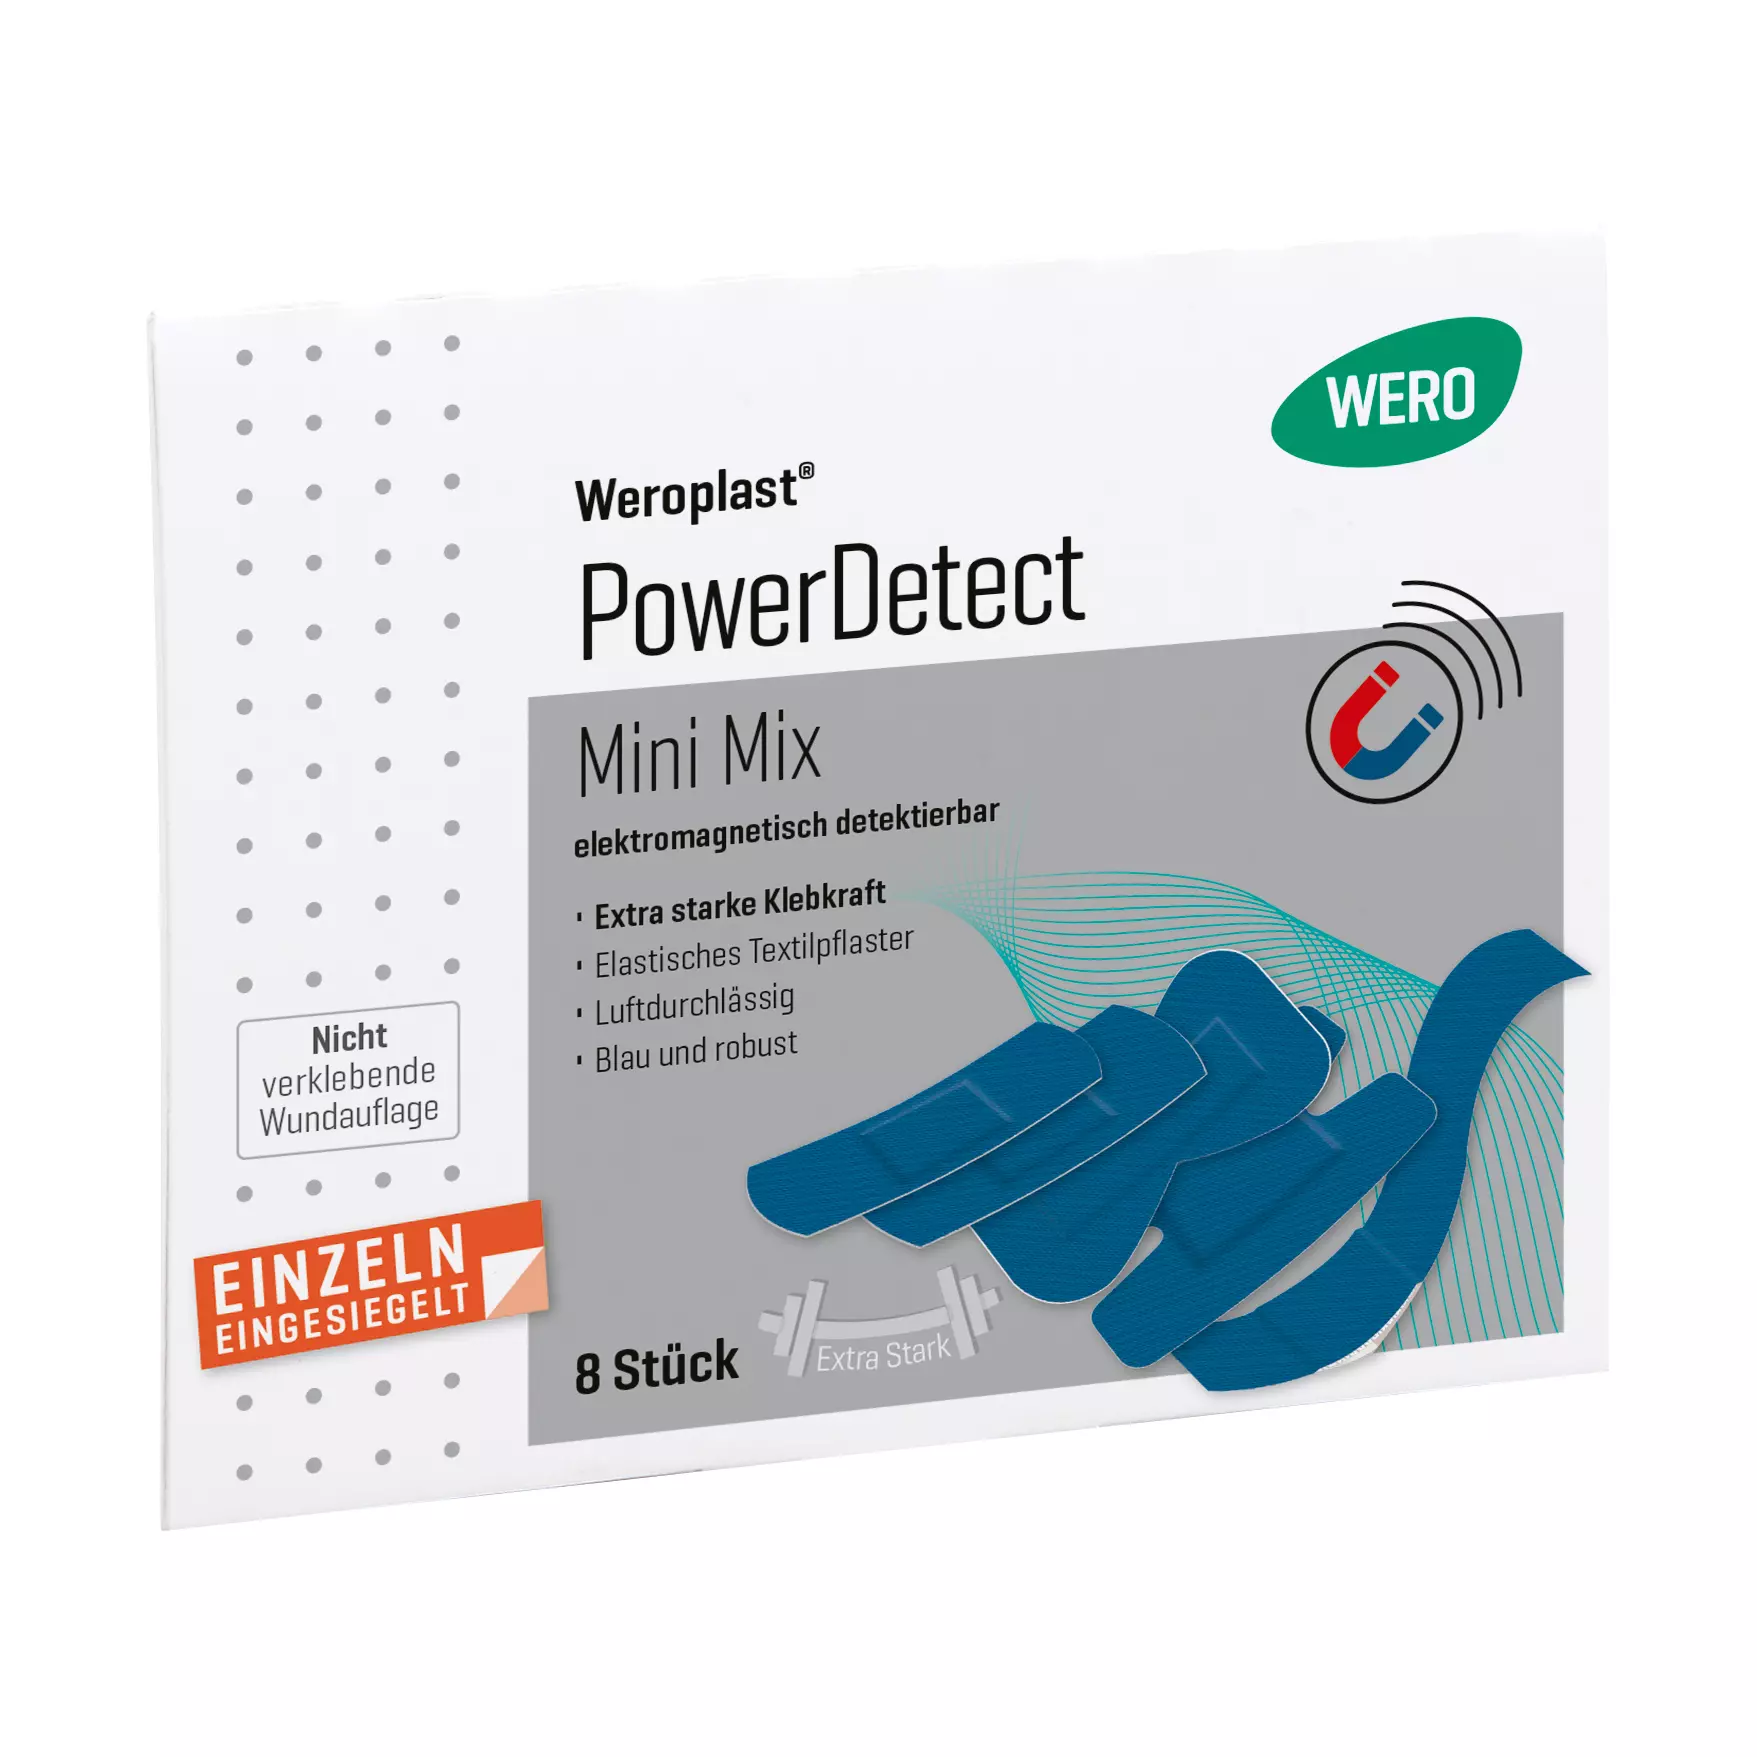 Pflasterset Weroplast® PowerDetect - Mini Mix